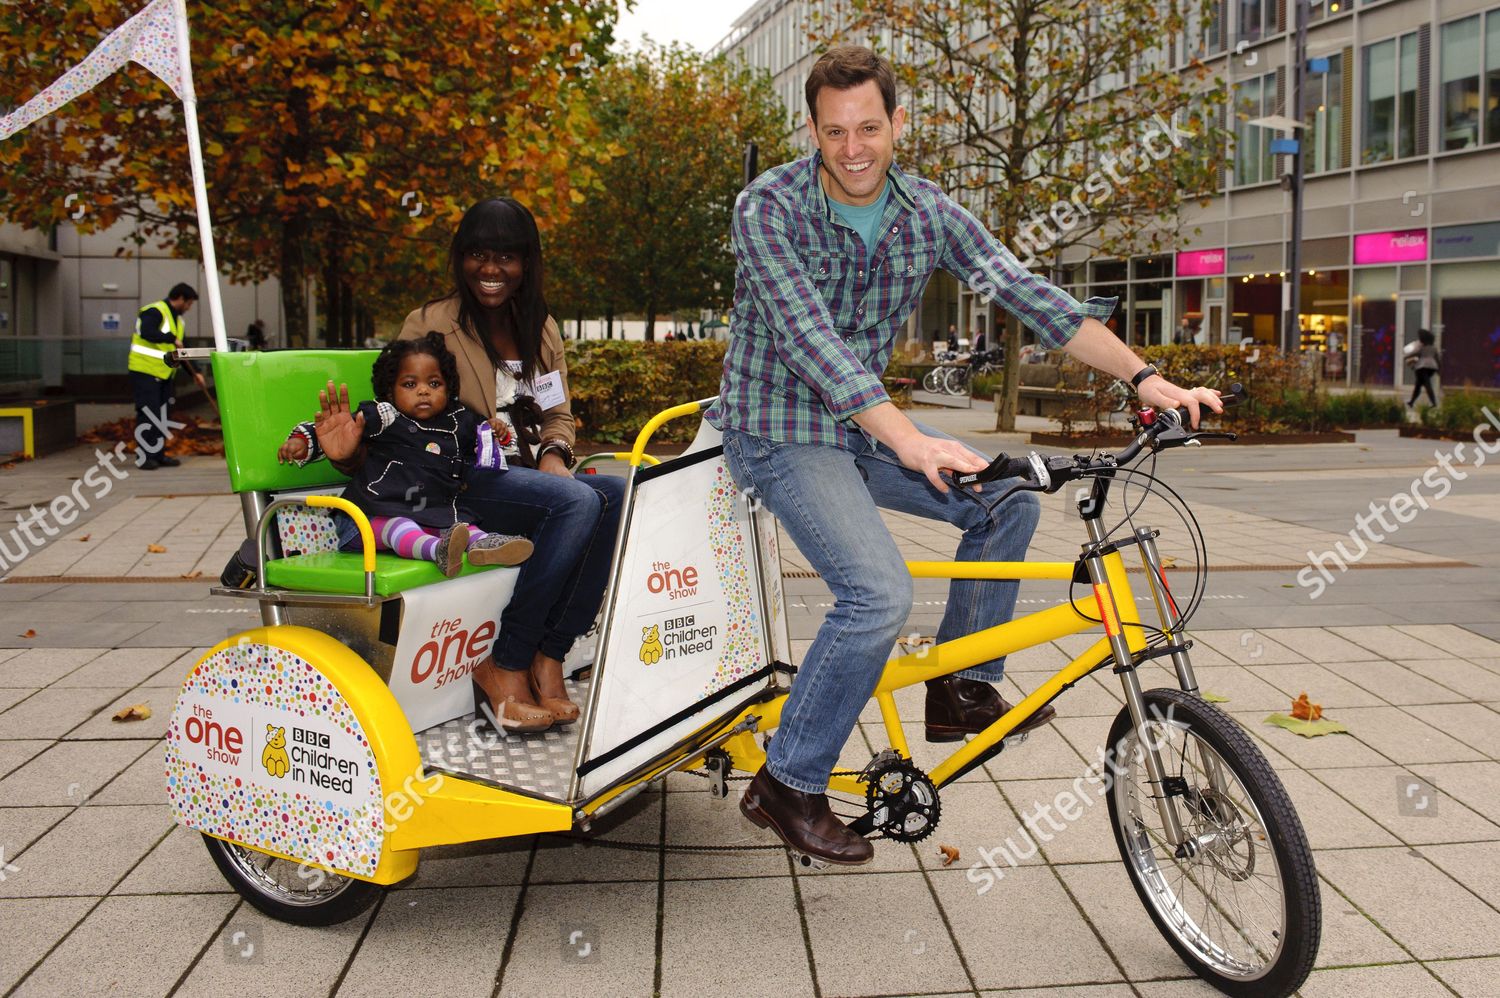 matt-baker-children-in-need-cycle-ride-london-britain-shutterstock-editorial-1489940i.jpg